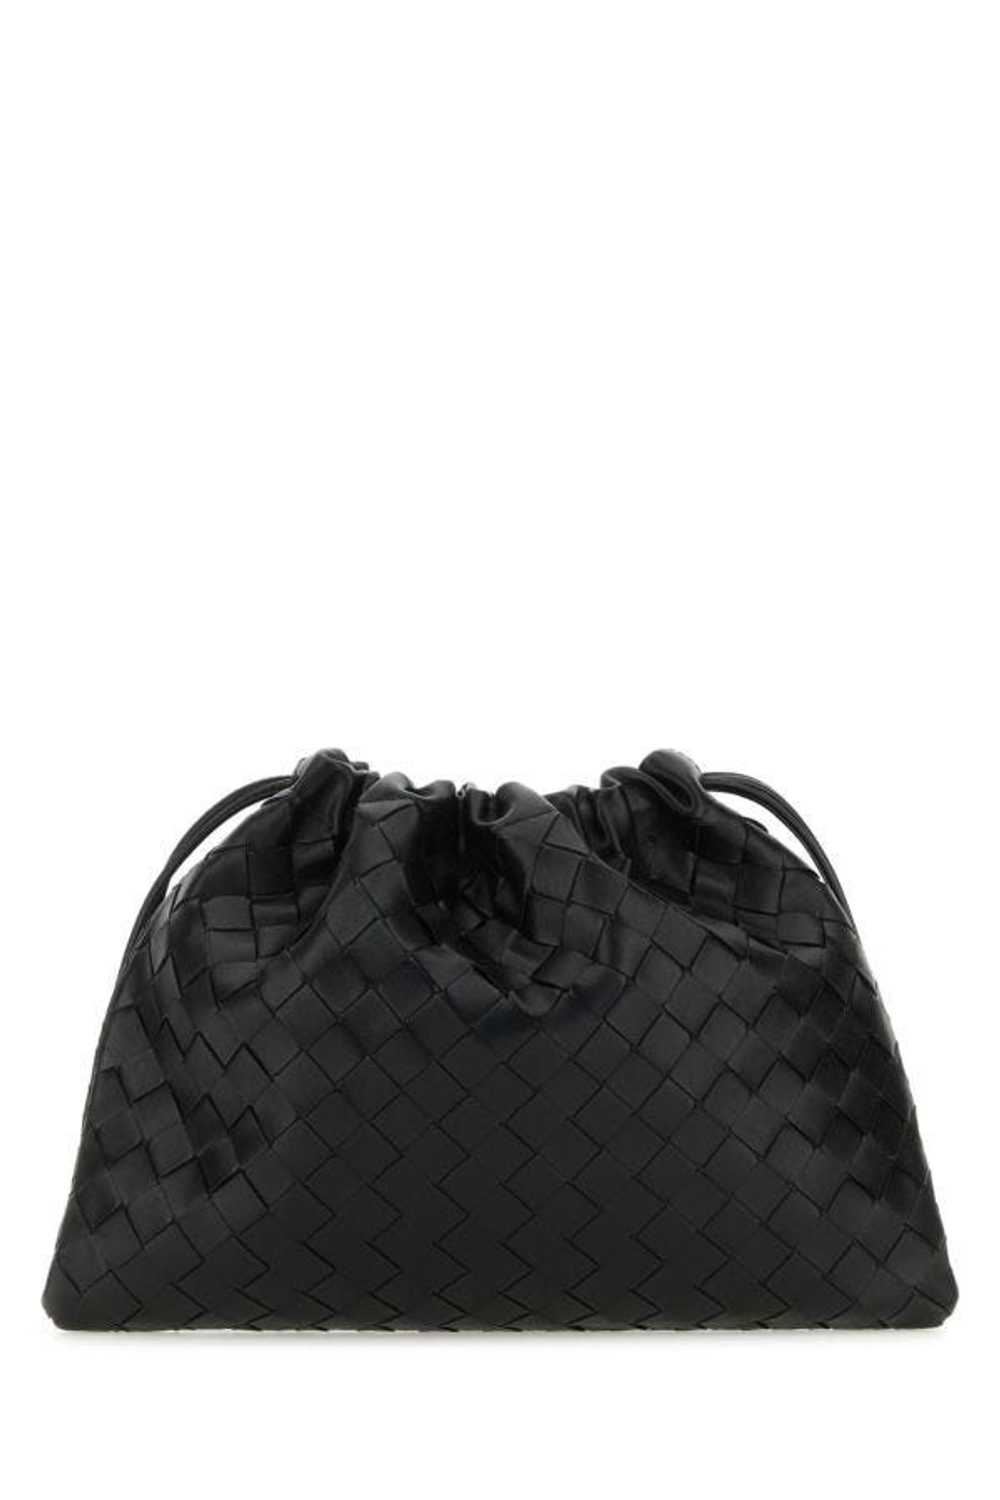 Bottega Veneta Black Leather Medium Clutch - image 5